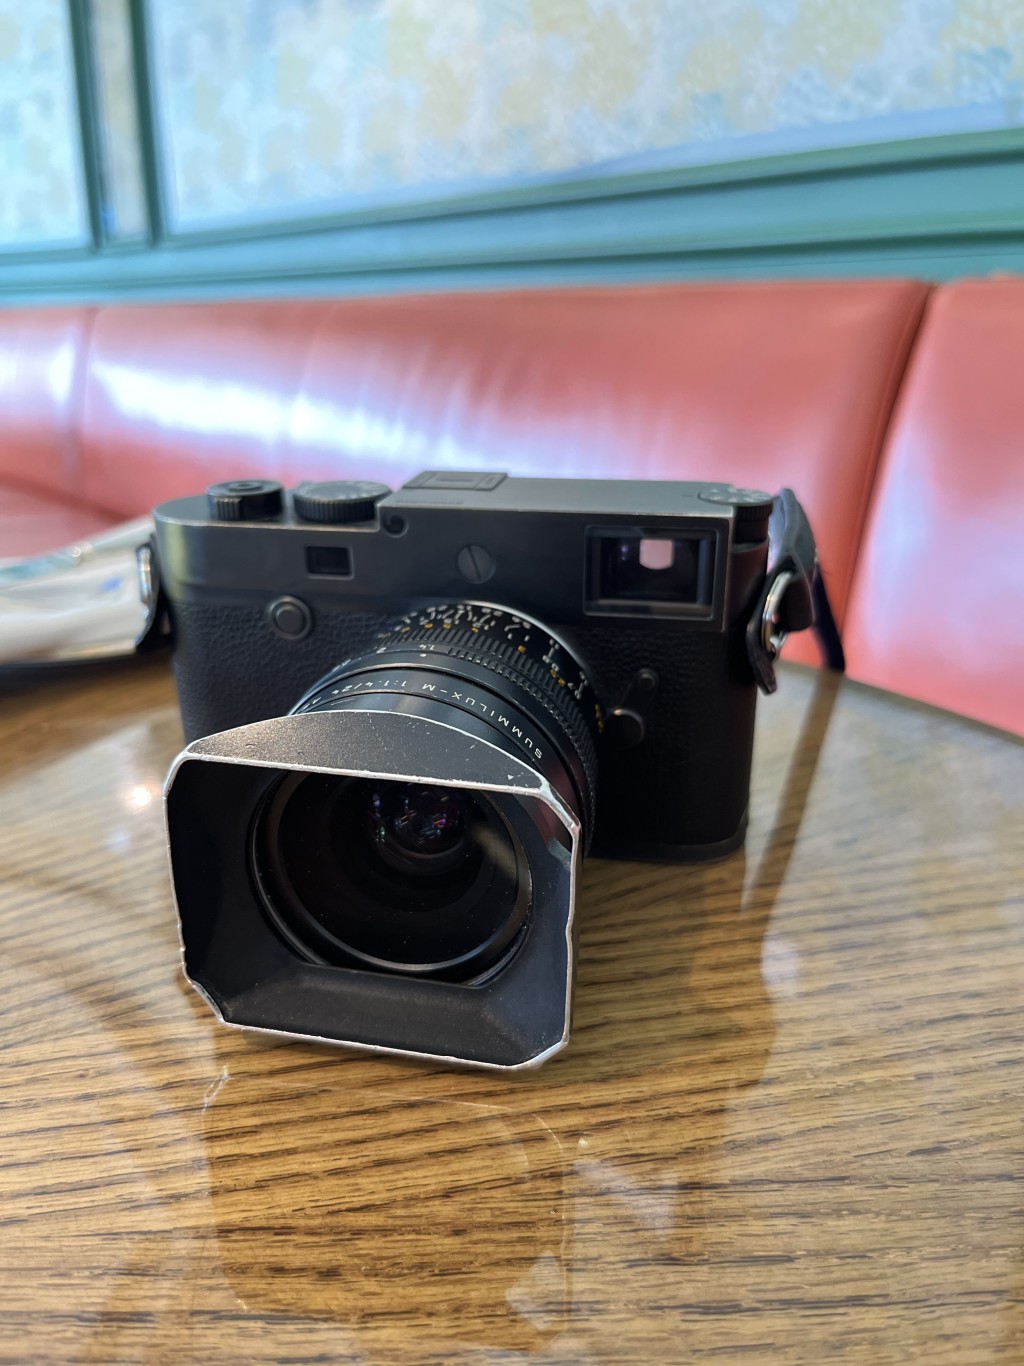 Alan随身携带的相机，正有这部Leica M10 Monochrom。